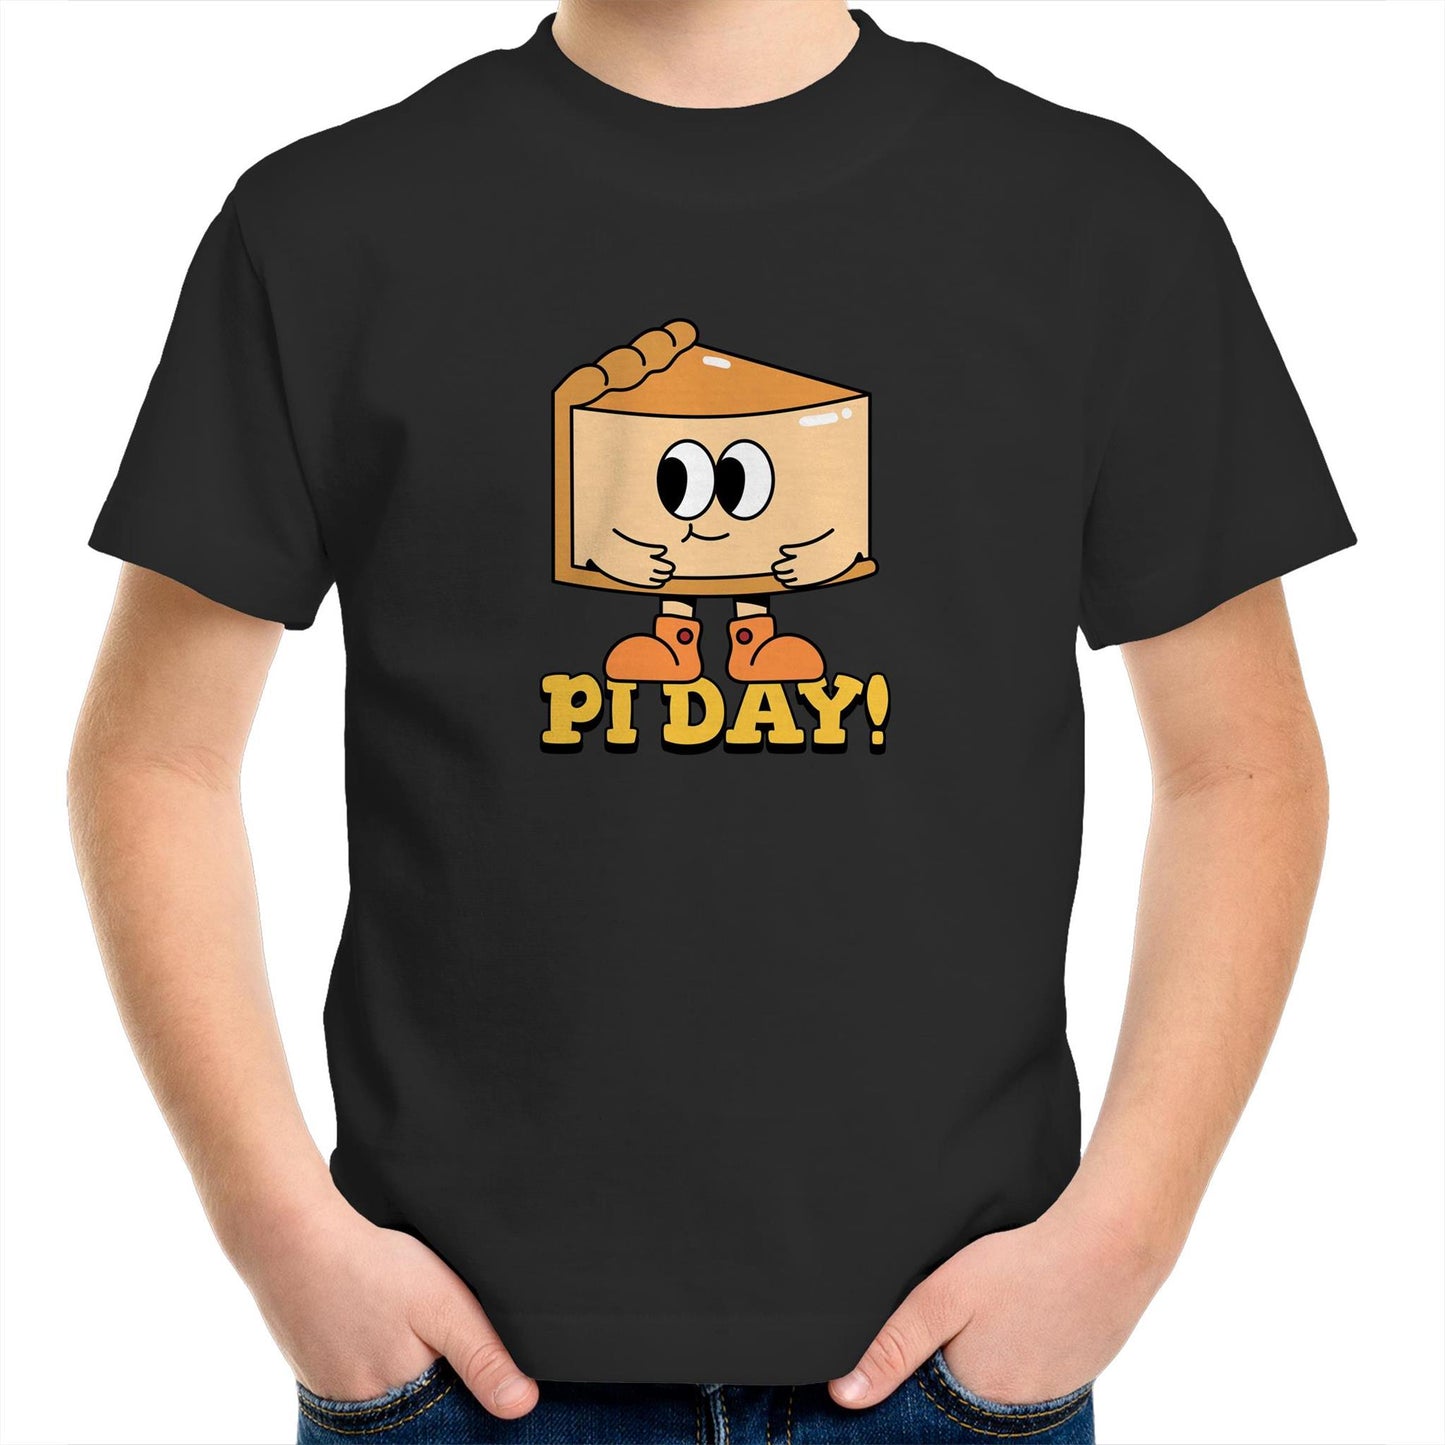 Pi Day - Kids Youth Crew T-Shirt Black Kids Youth T-shirt Maths Science